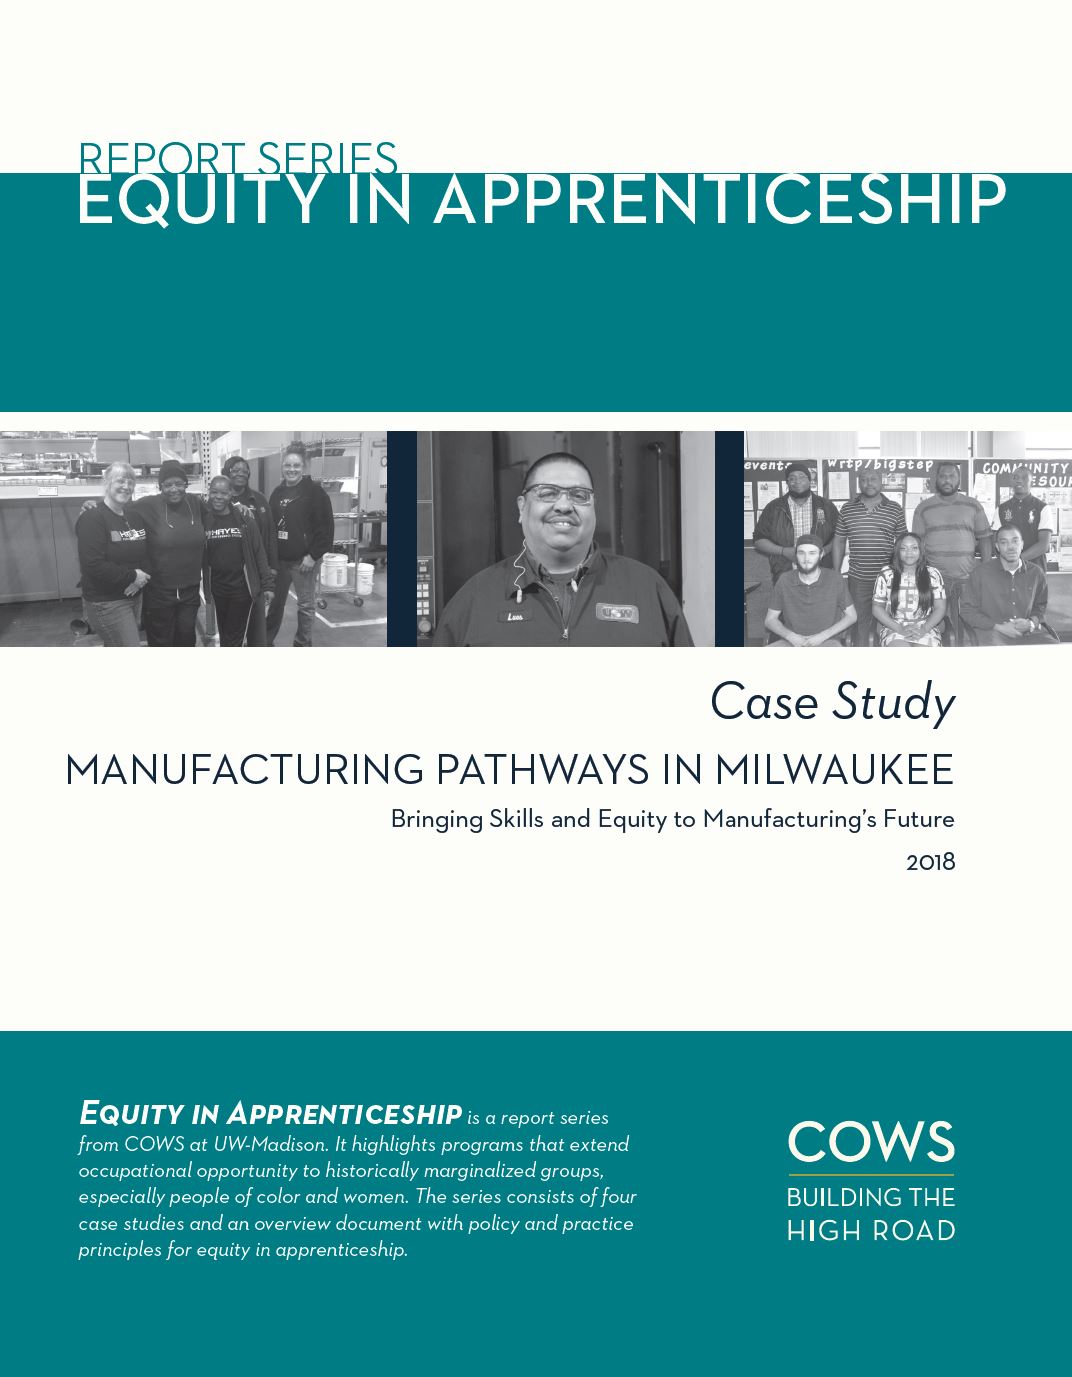 IMT Apprenticeship Case Study